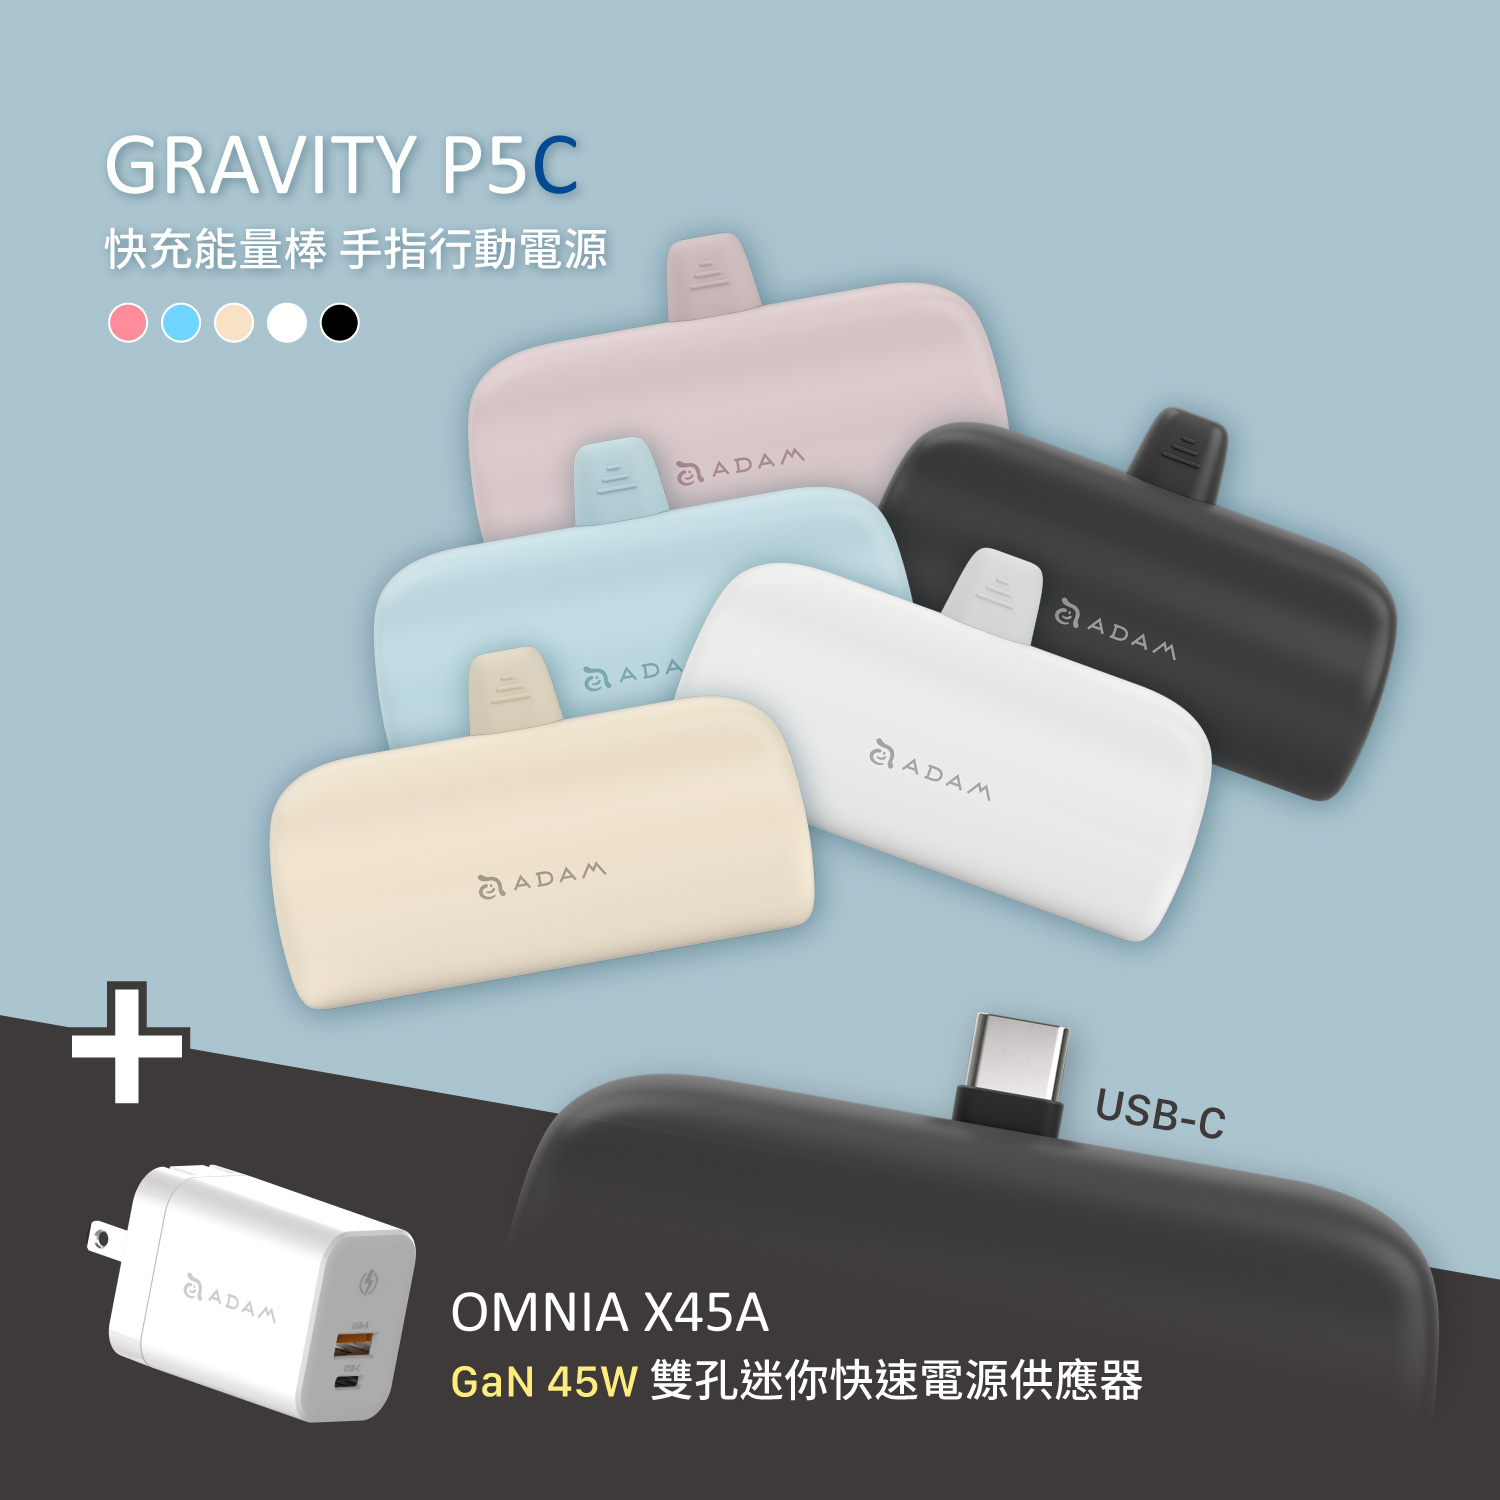 GRAVITY P5C USB-C 口袋型行動電源_OMNIA X45A GaN 45W 雙孔迷你快速電源供應器